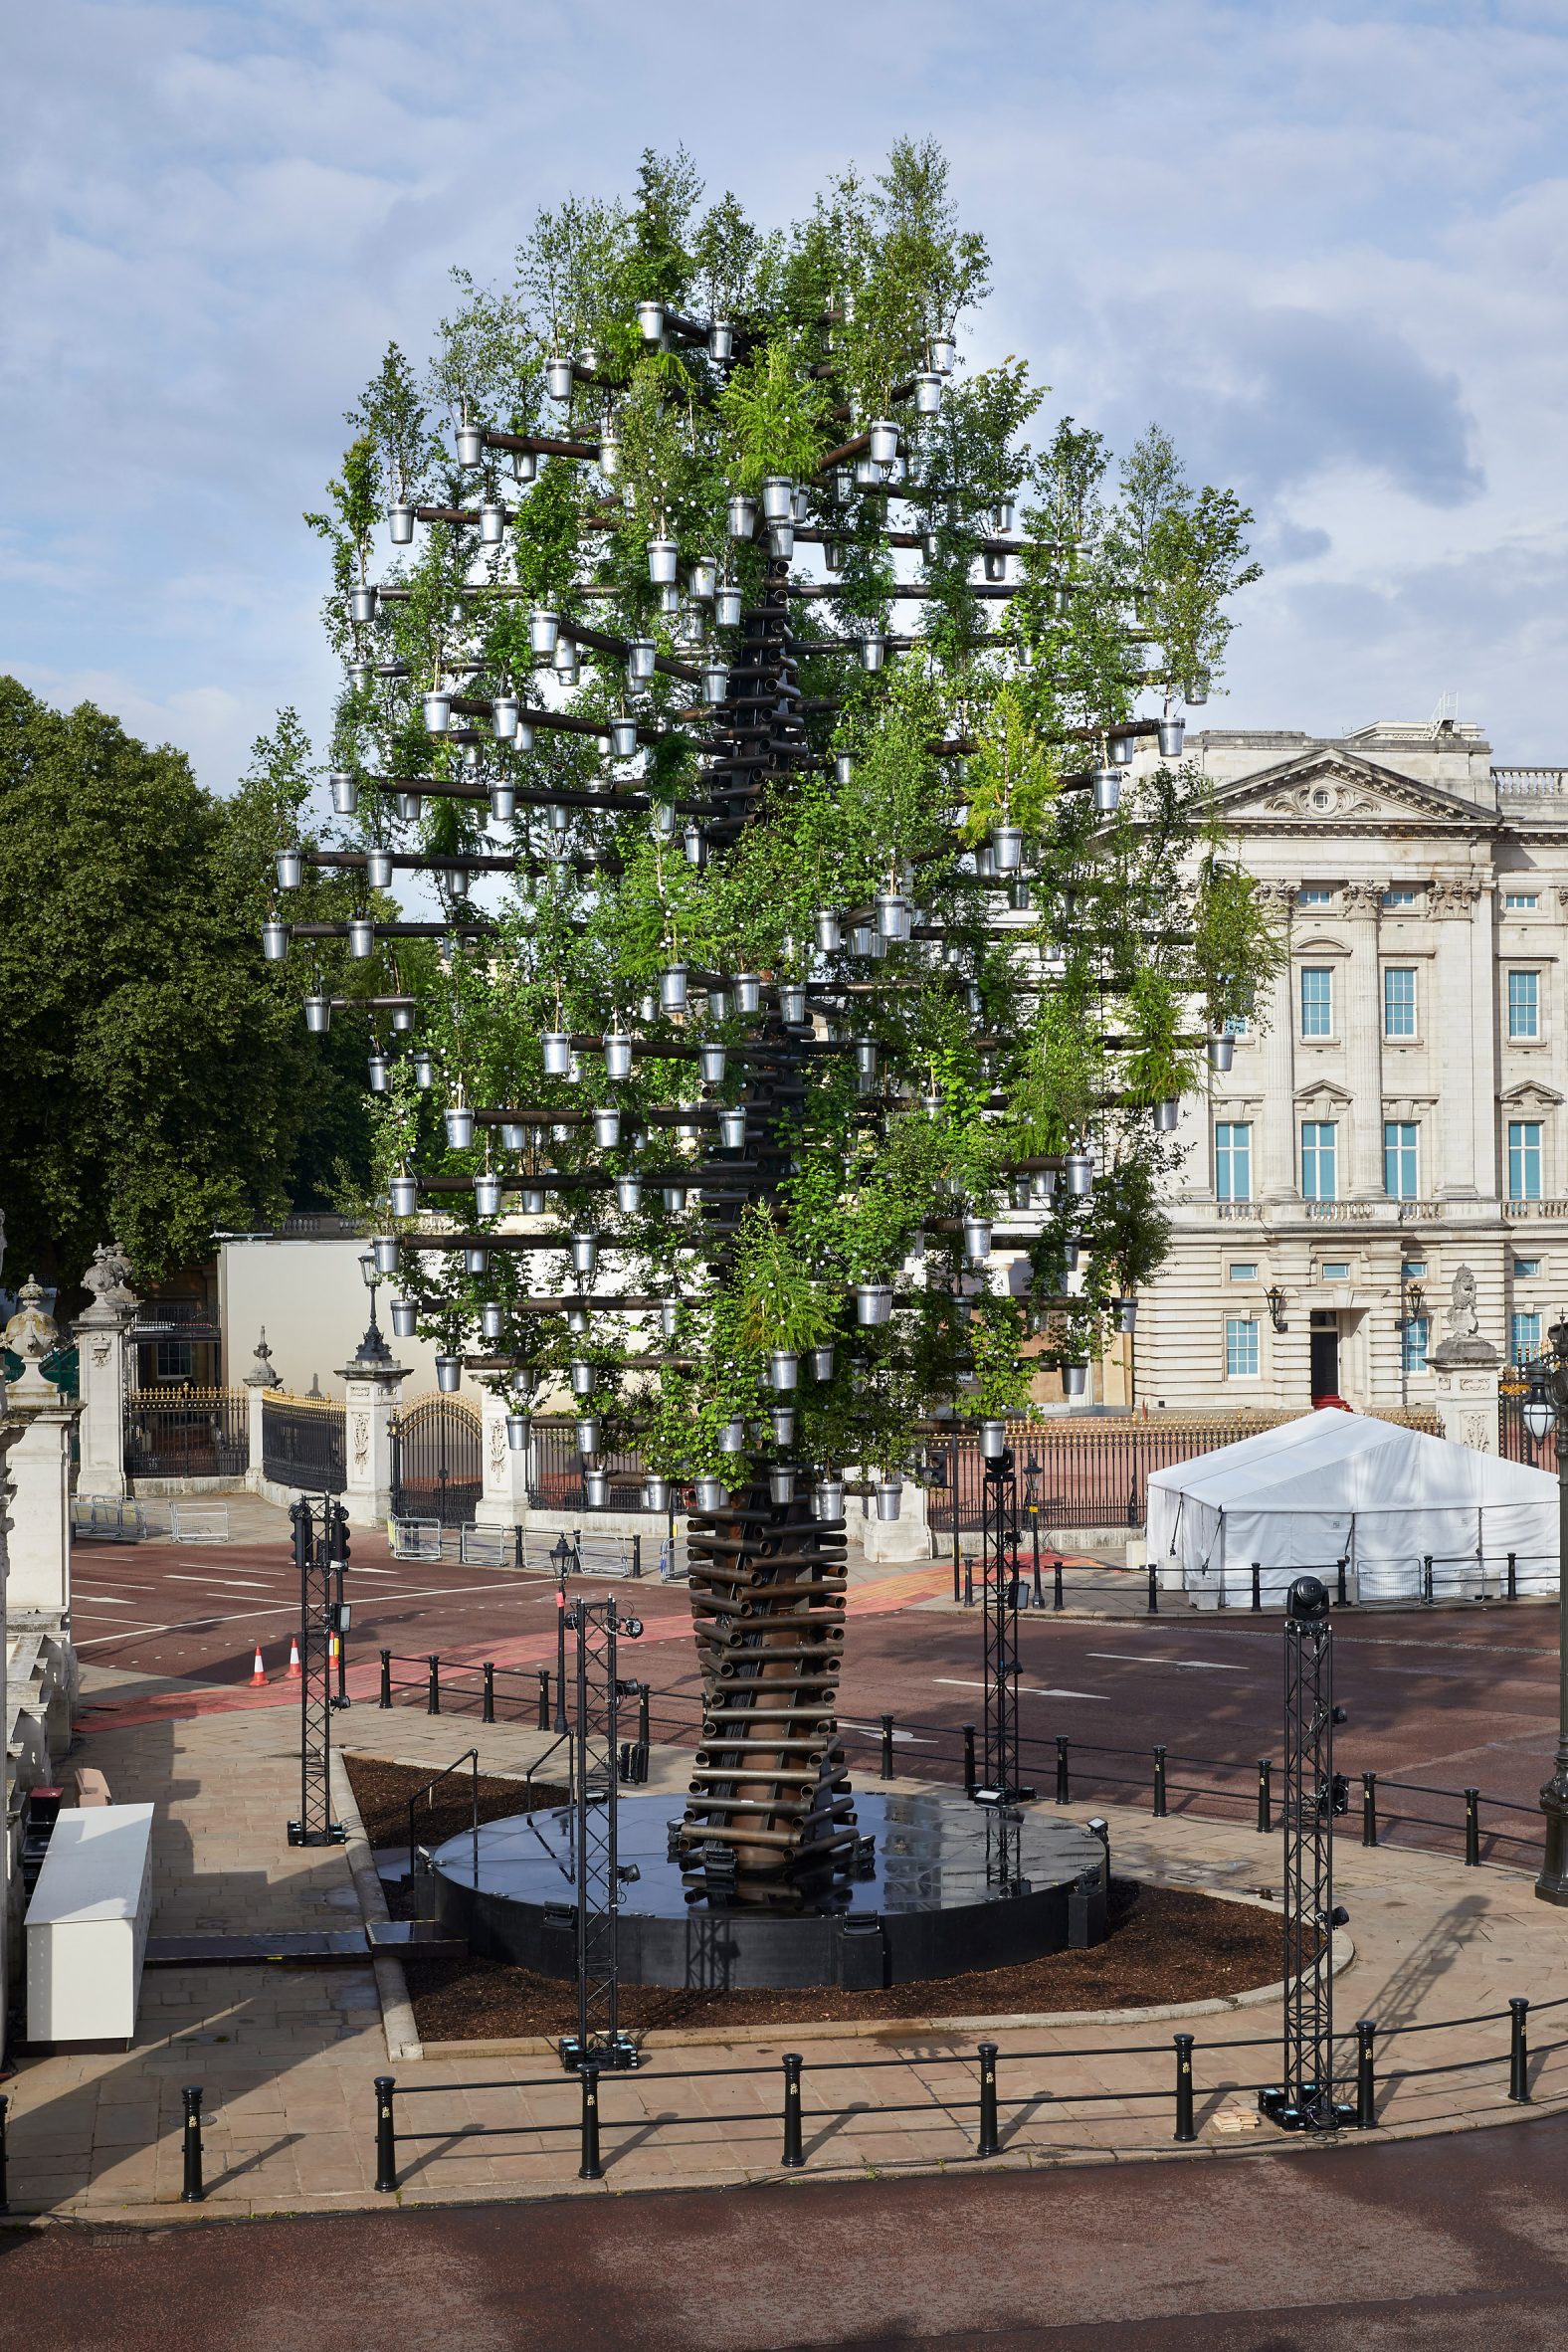 Tree of Trees sculpture